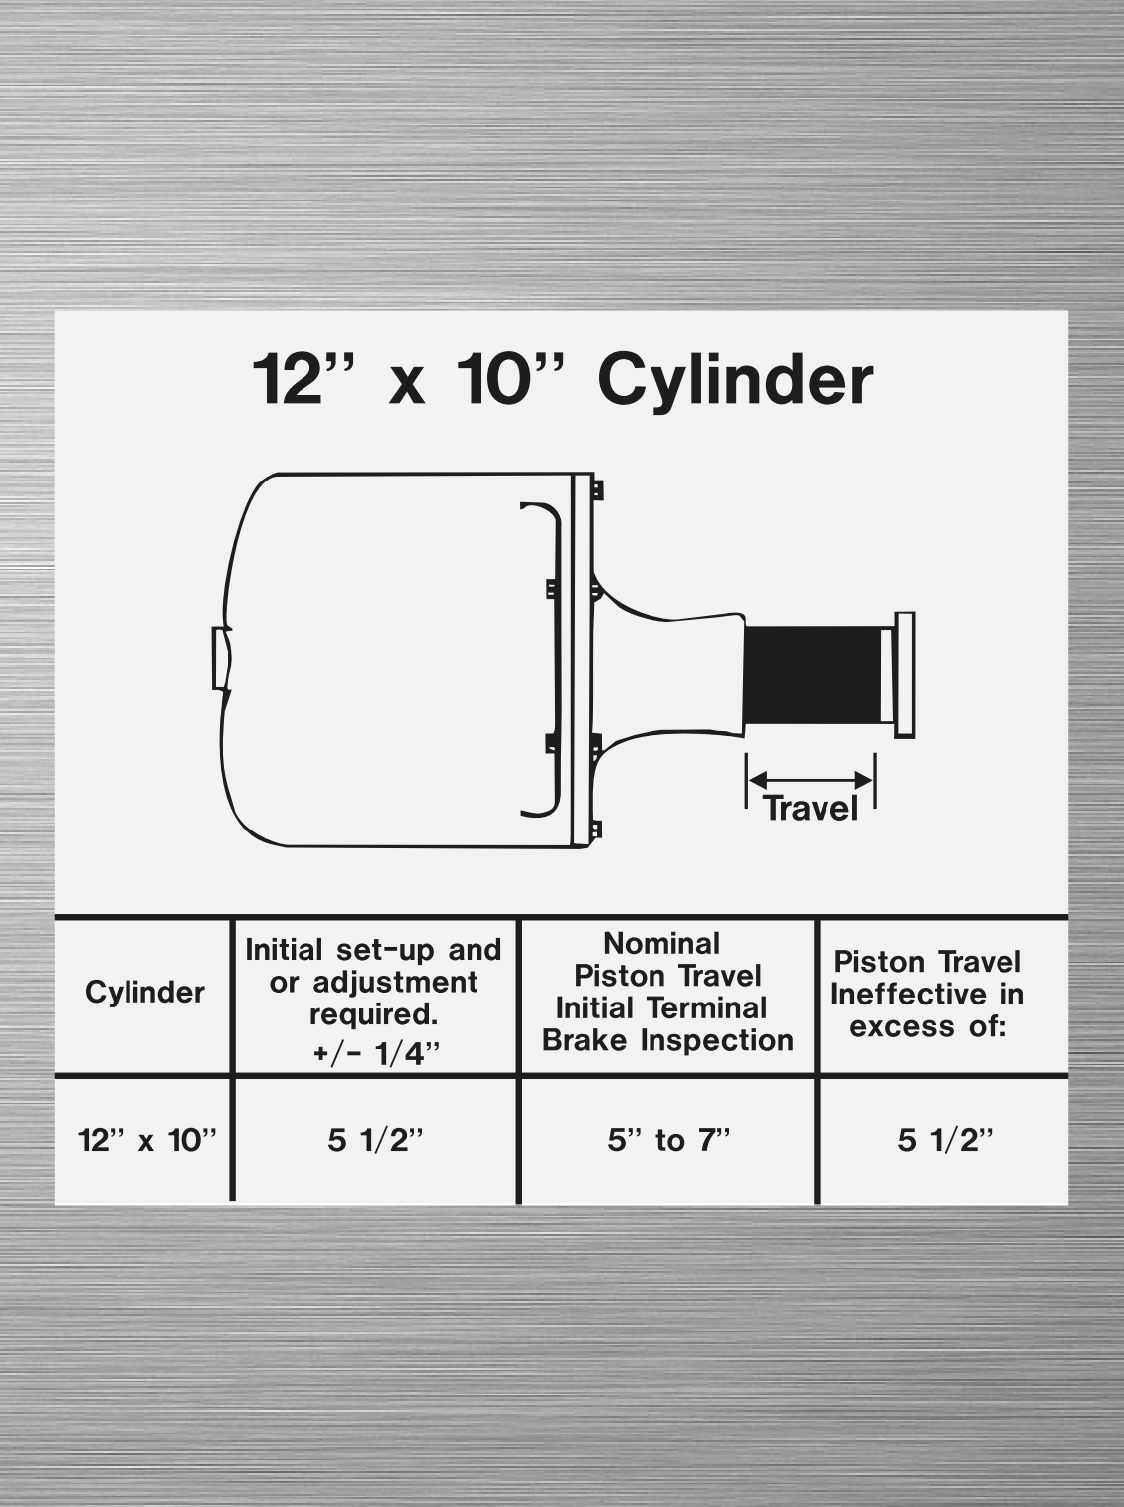 Piston Travel Decal - 12" x 10" Cylinder